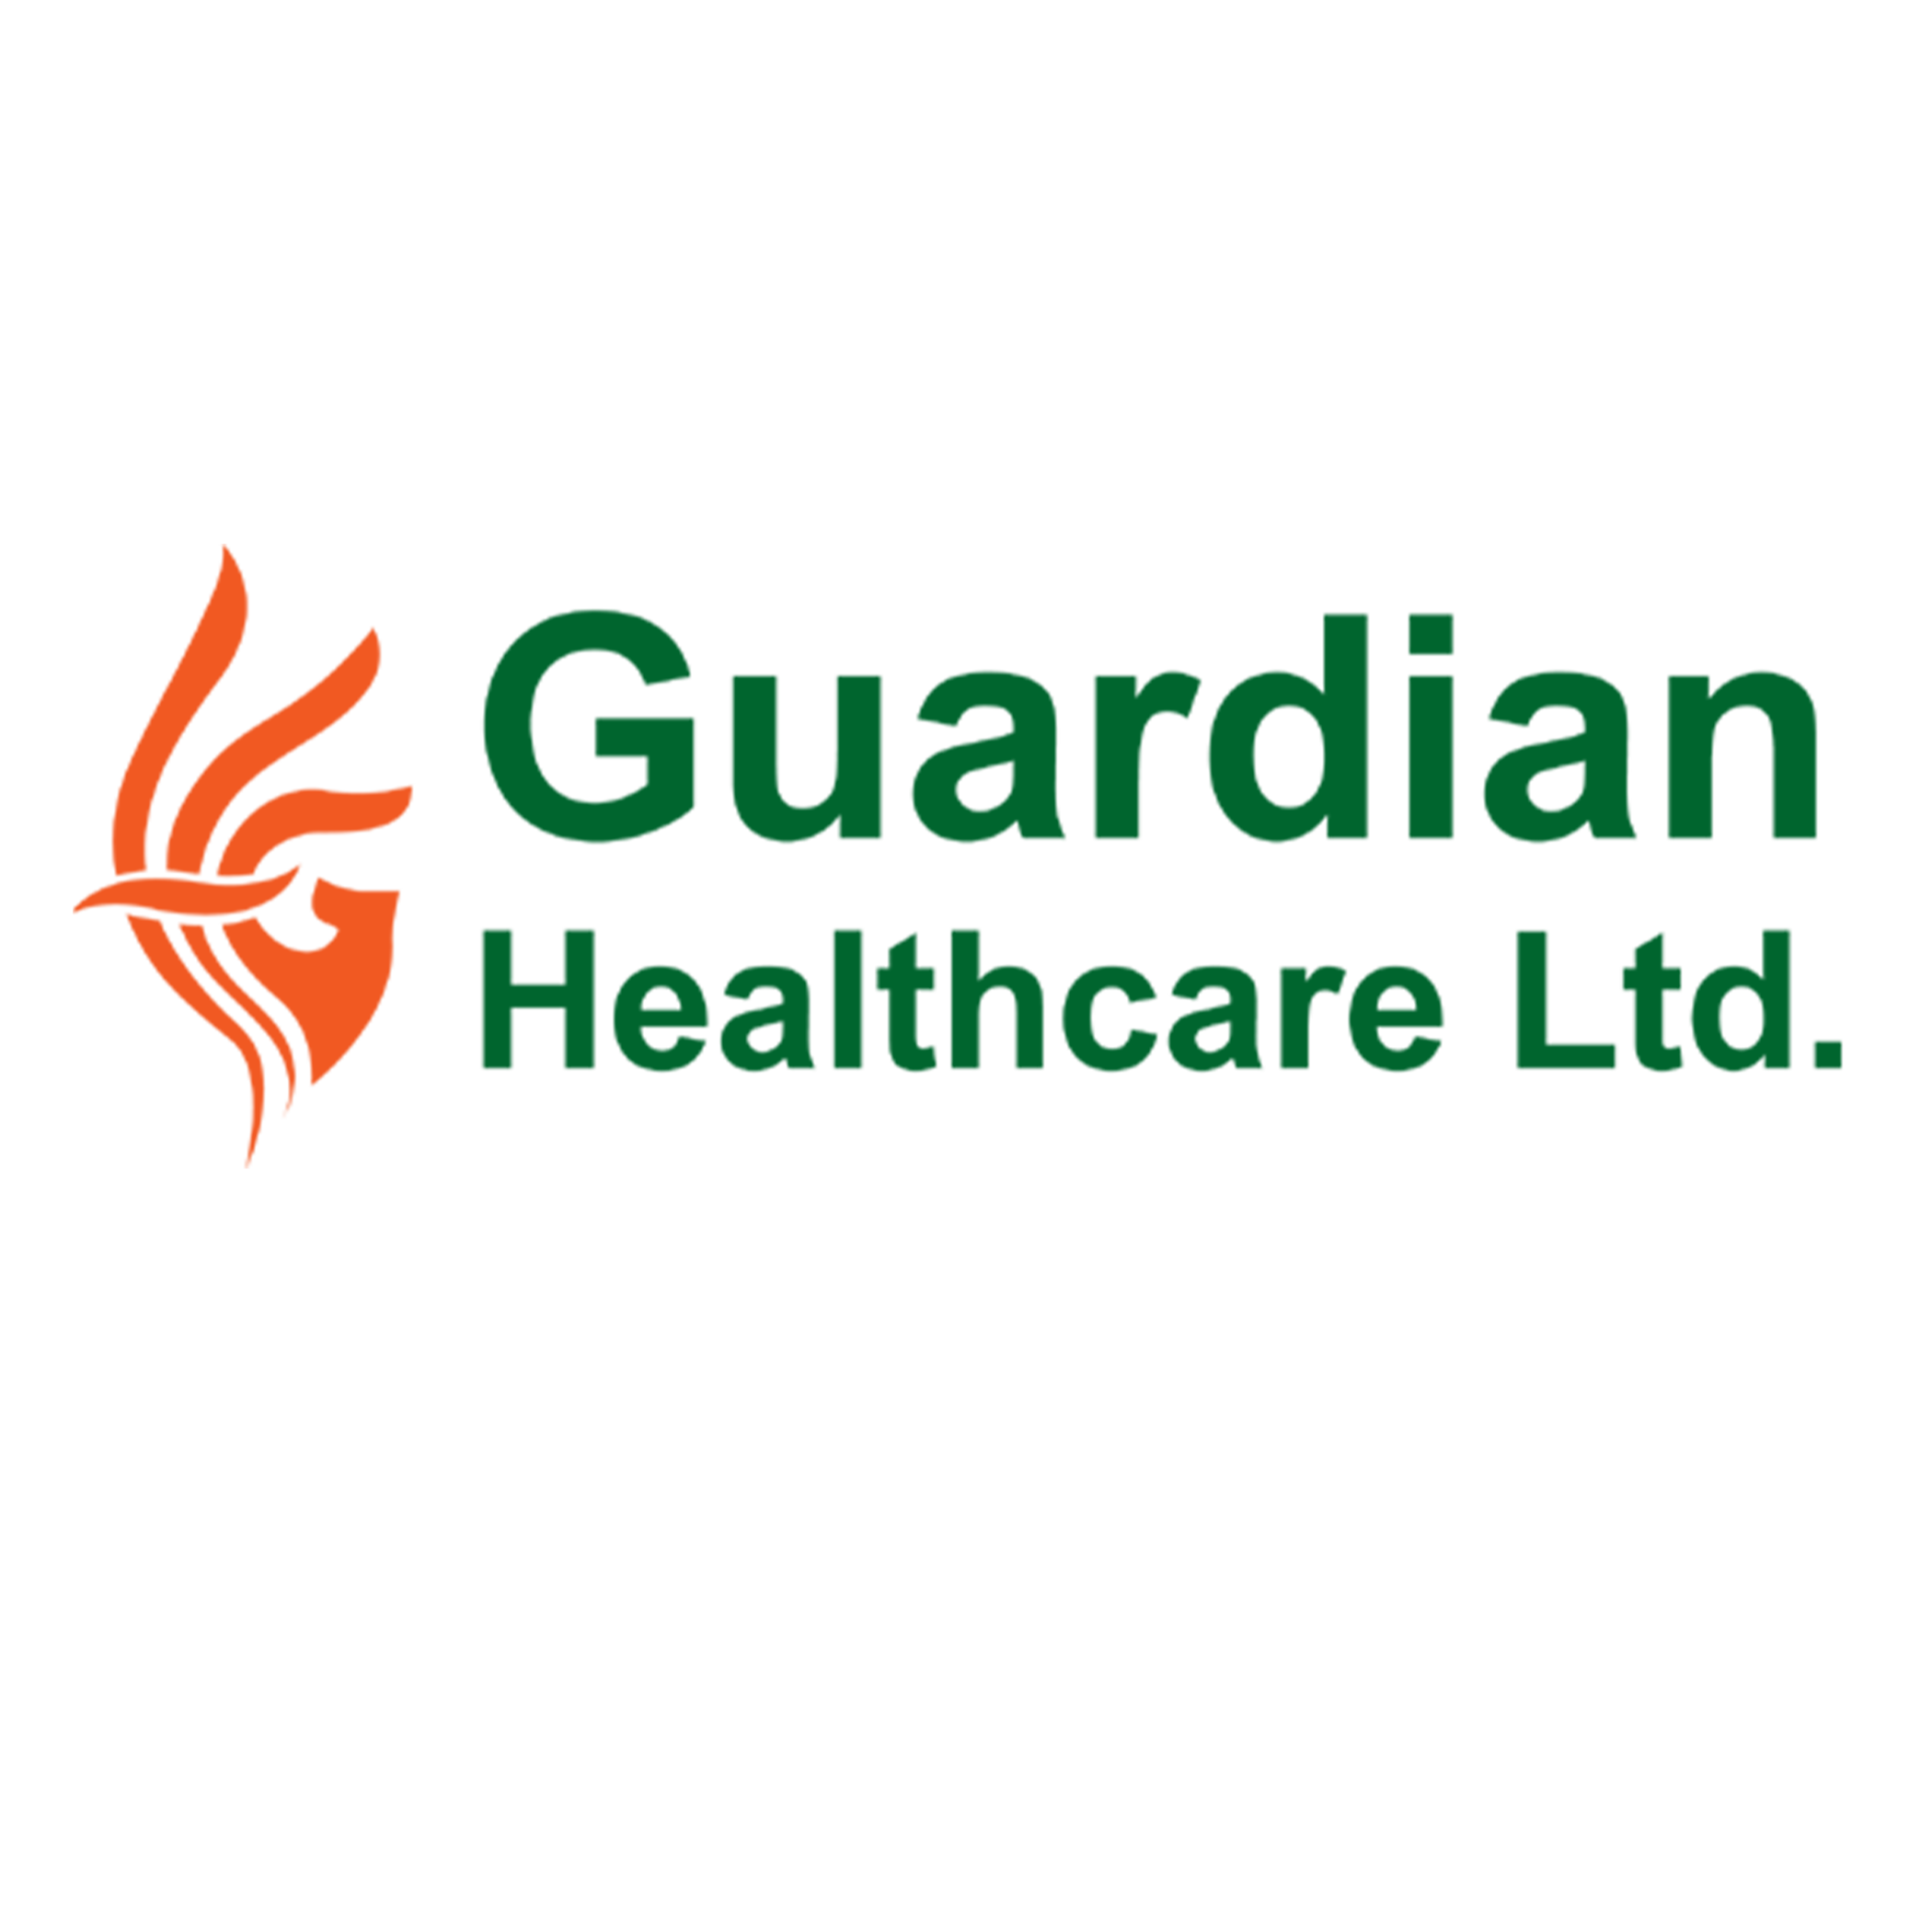 guardian logo real estate company near me